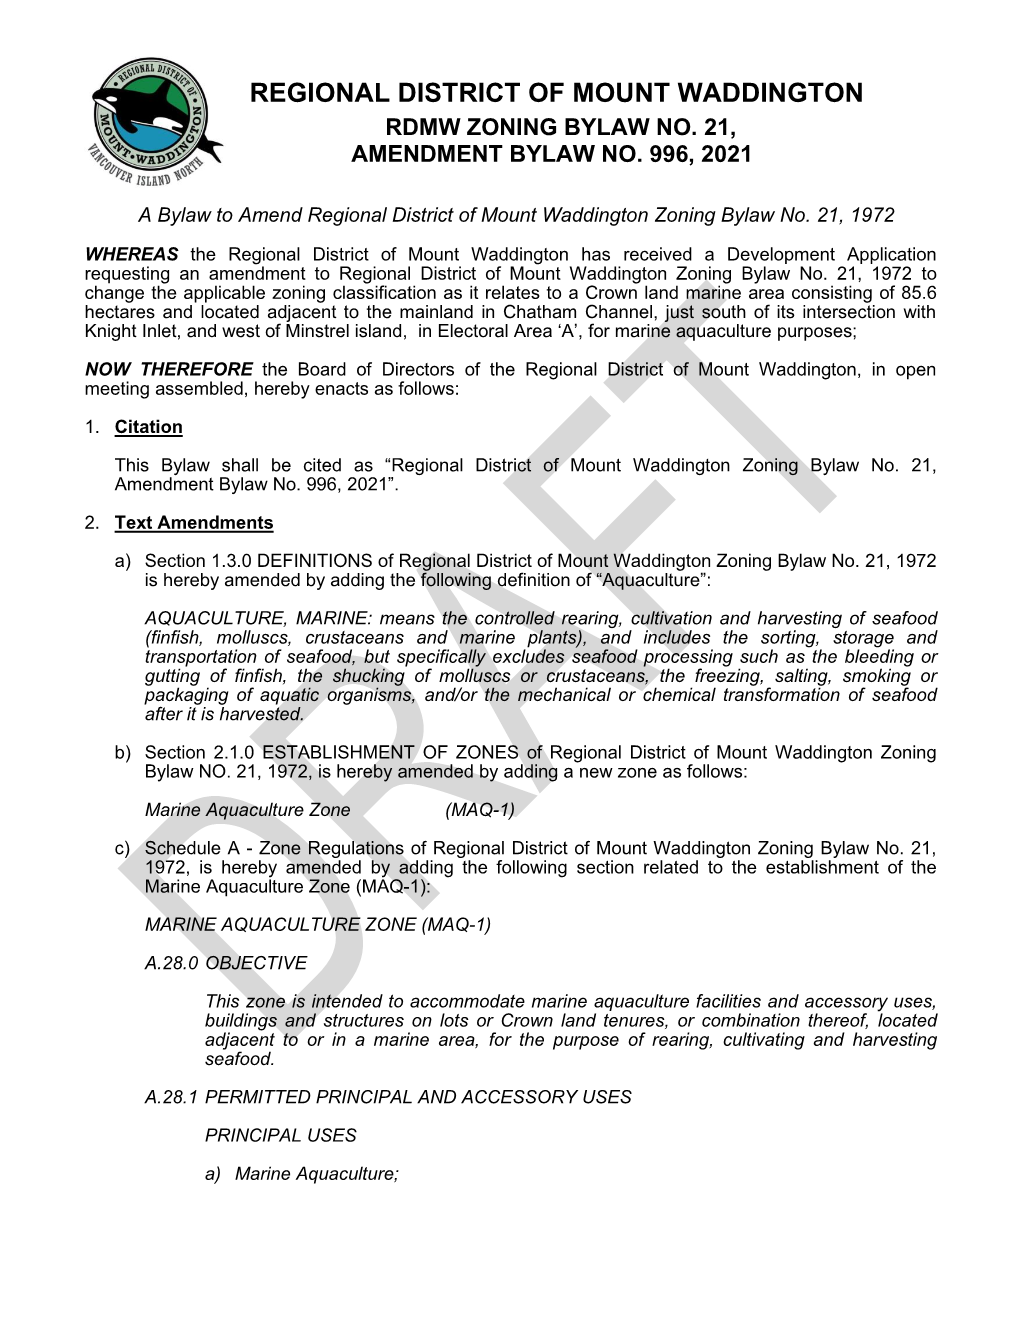 Regional District of Mount Waddington Zoning Bylaw No. 21, Amendment Bylaw No